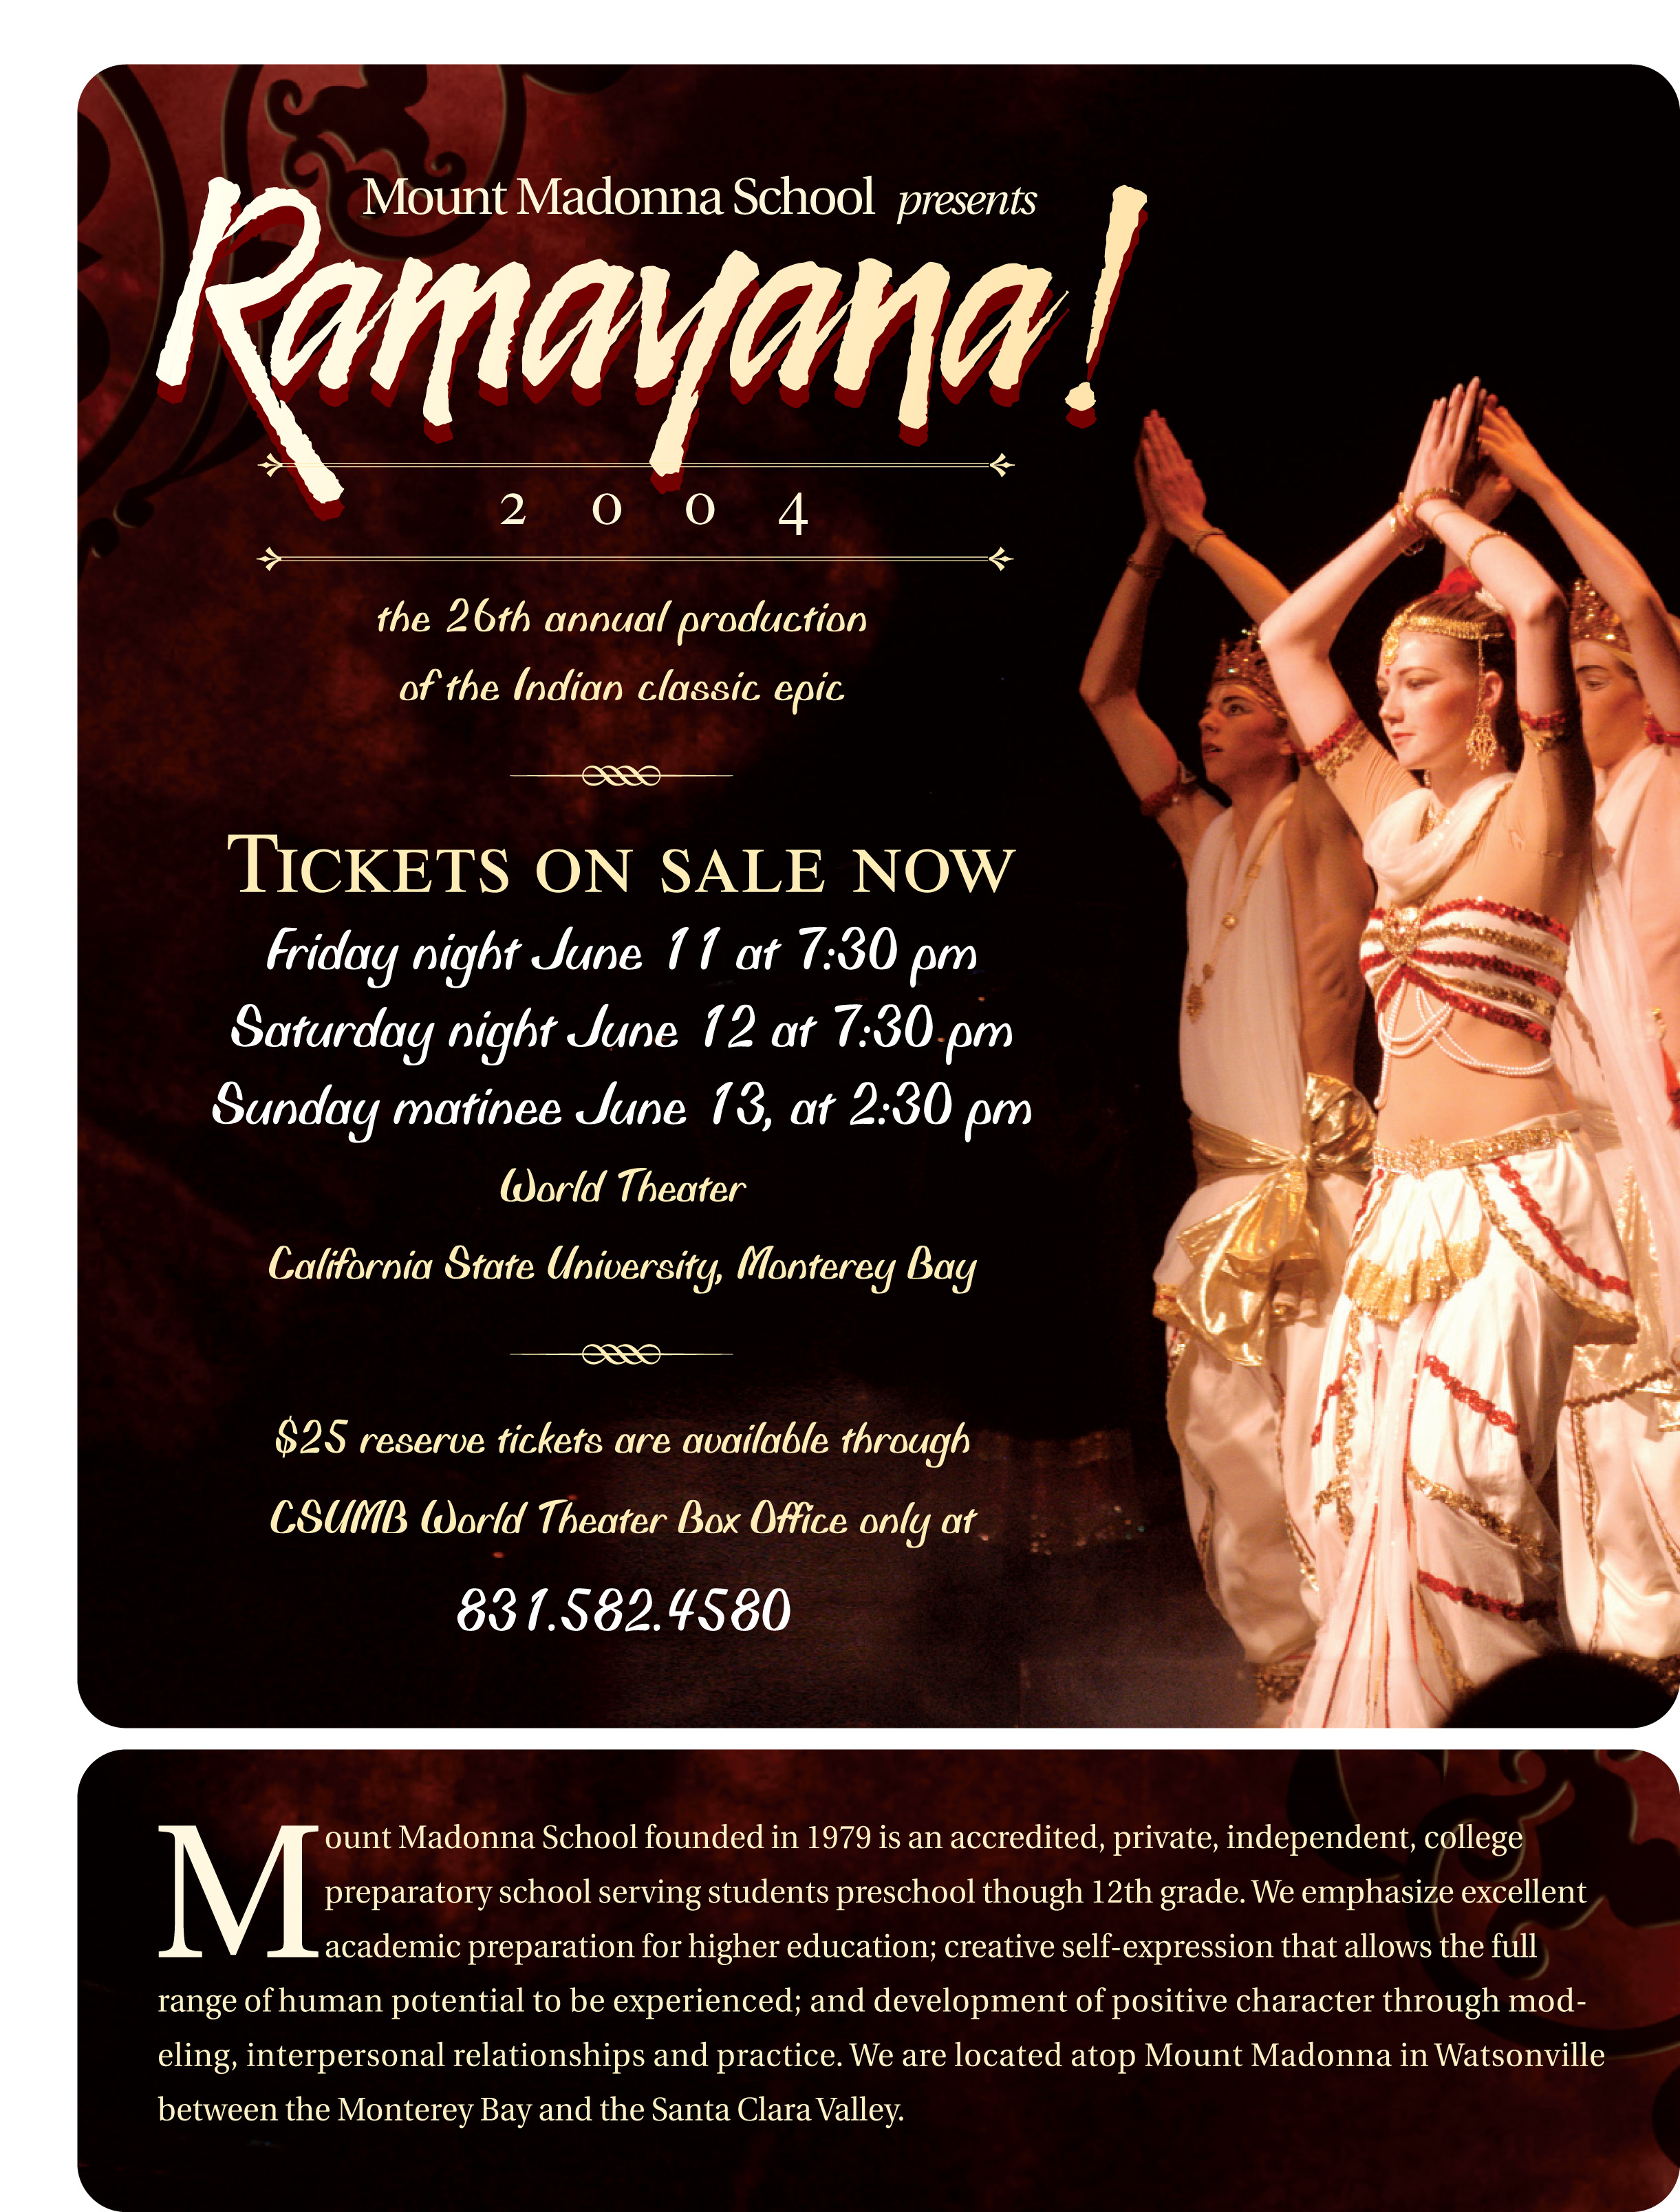 2004 Ramayana! Video